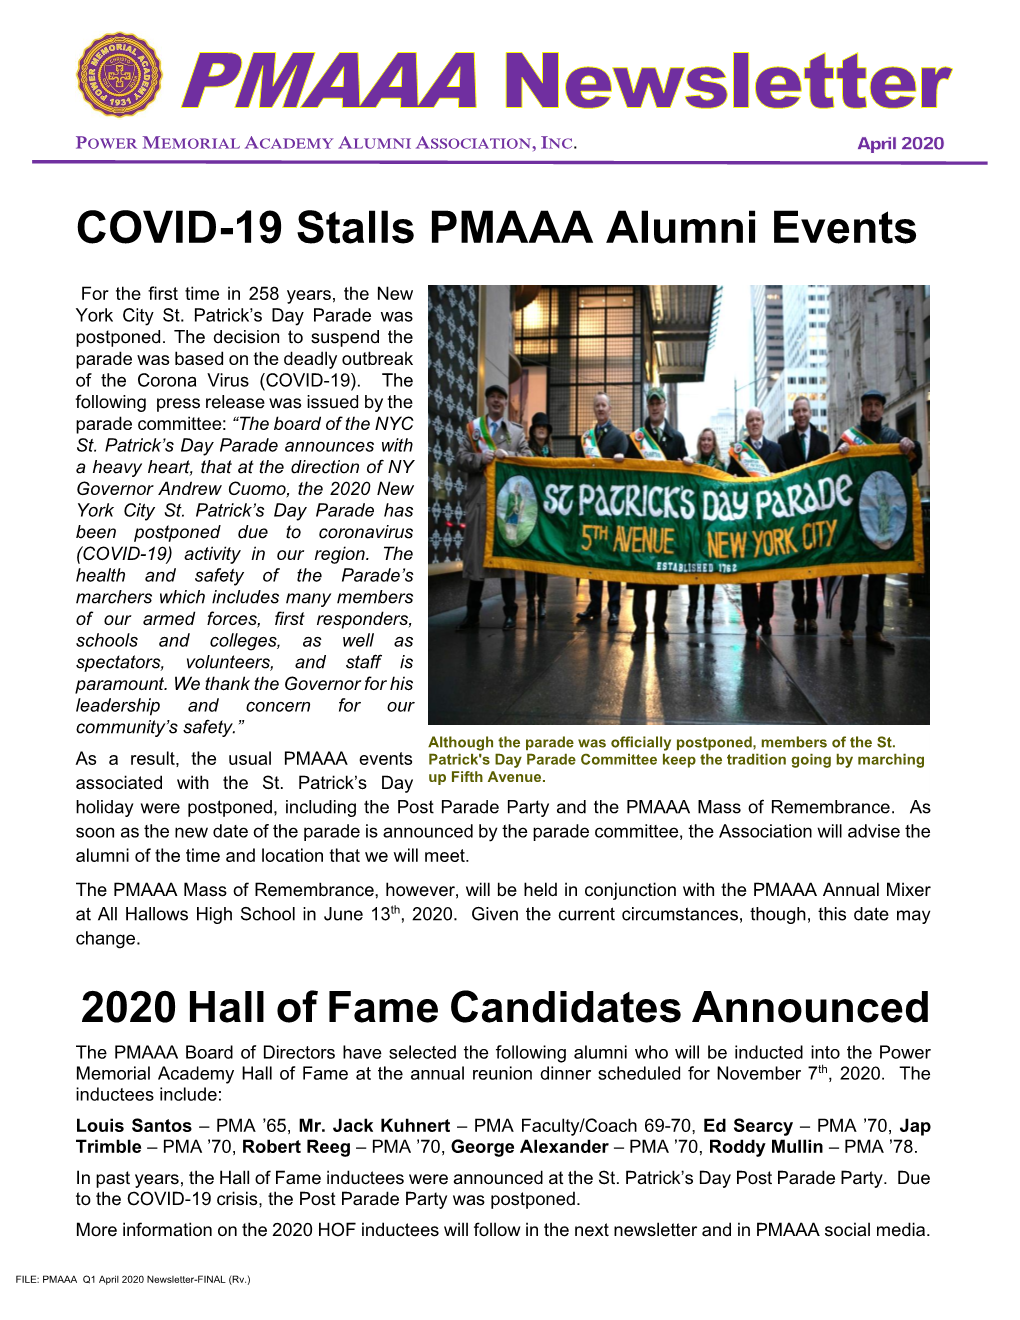 COVID-19 Stalls PMAAA Alumni Events